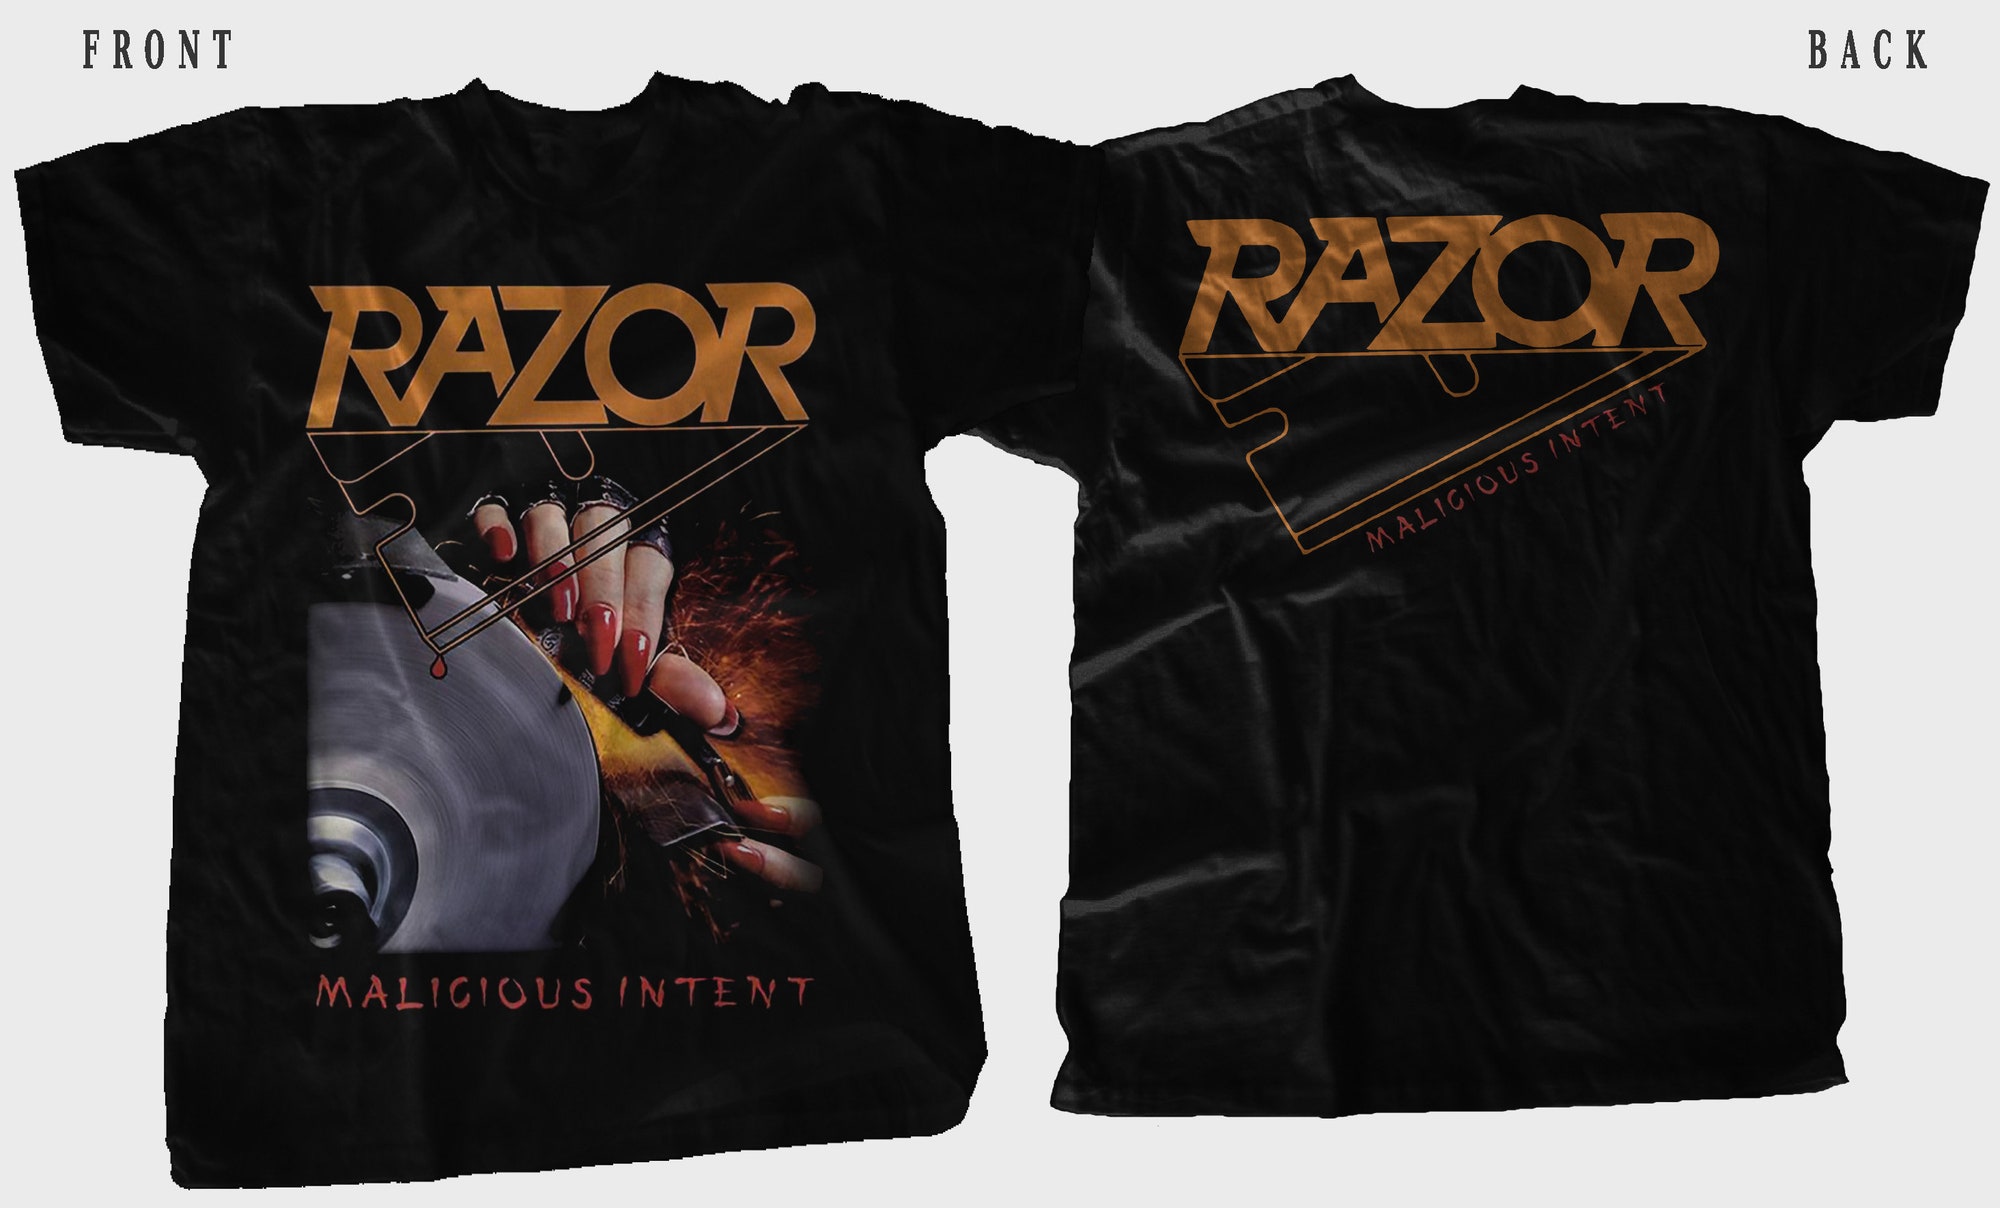 RAZOR - Malicious Intent t shirt